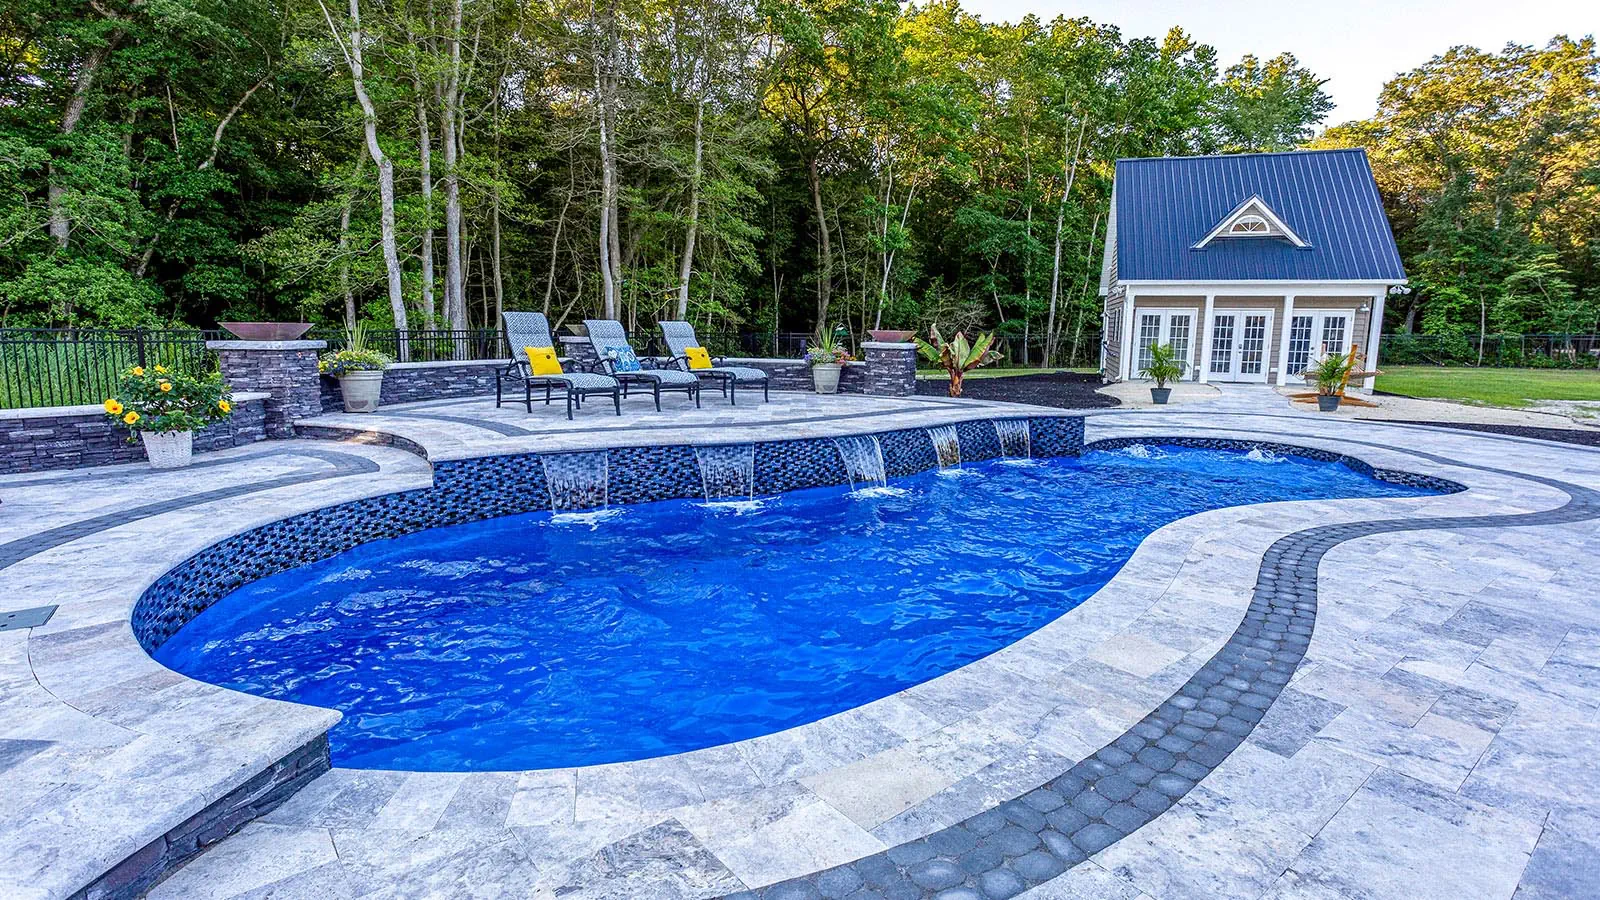 A Leisure Pools fiberglass pool in Sapphire Blue color